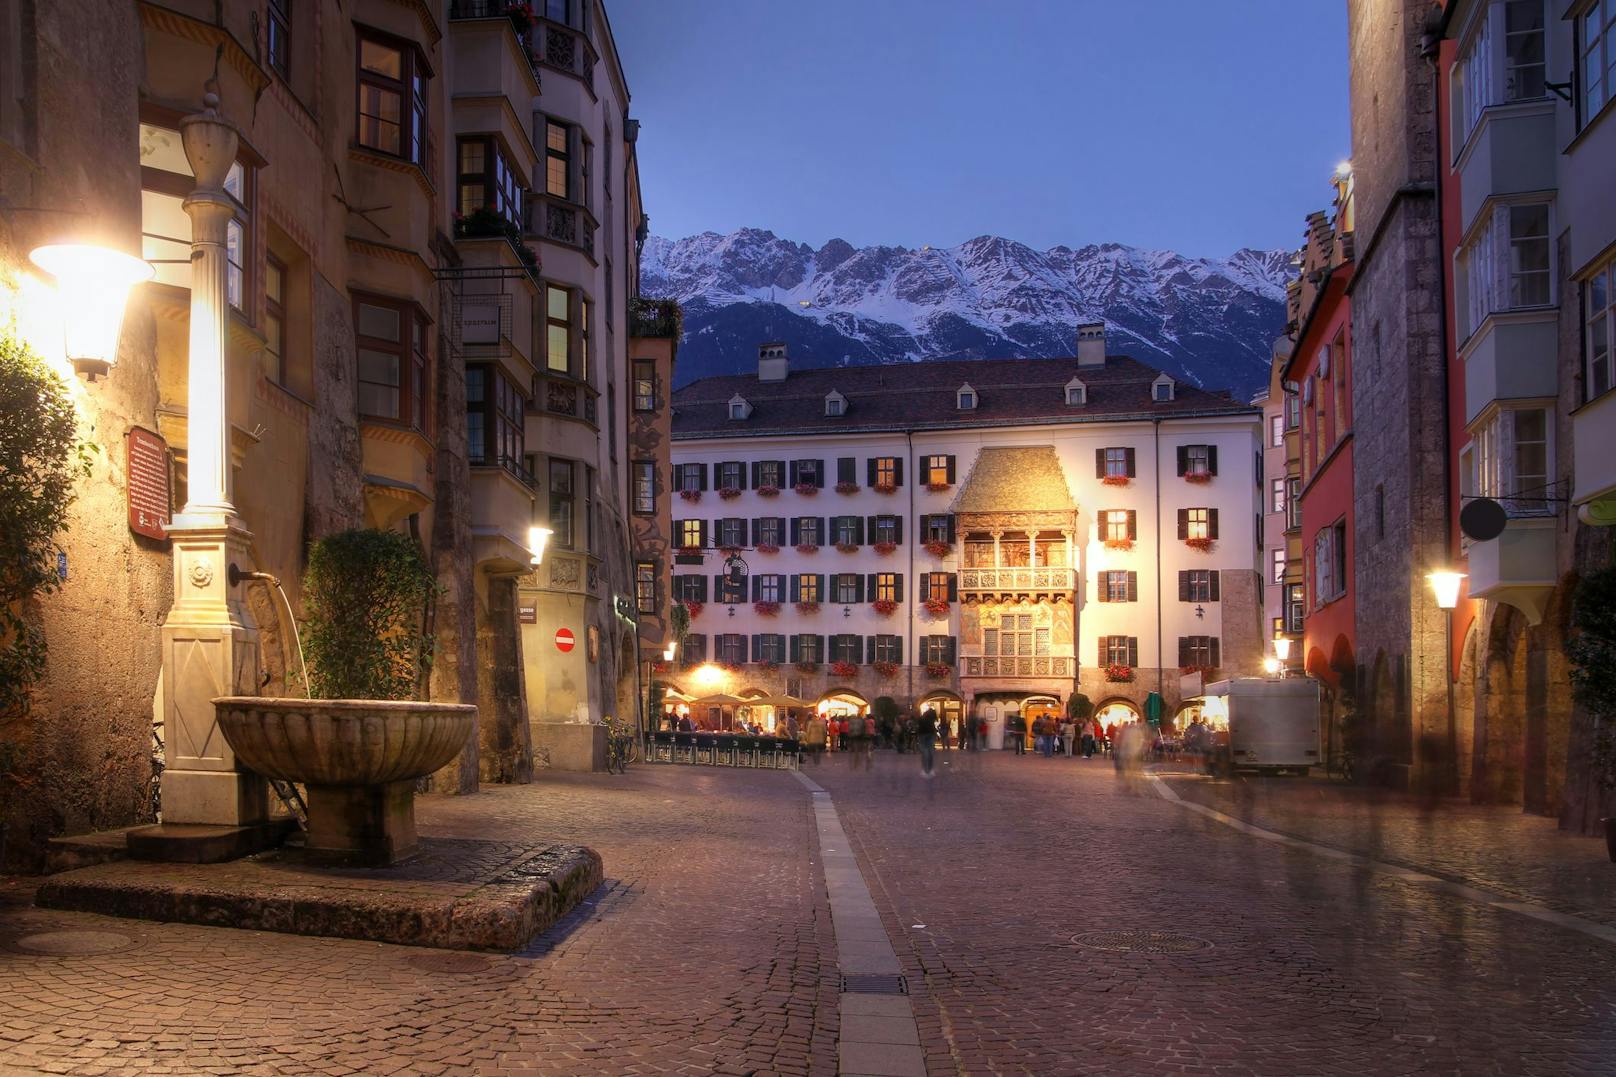 17. Goldenes Dachl in Innsbruck